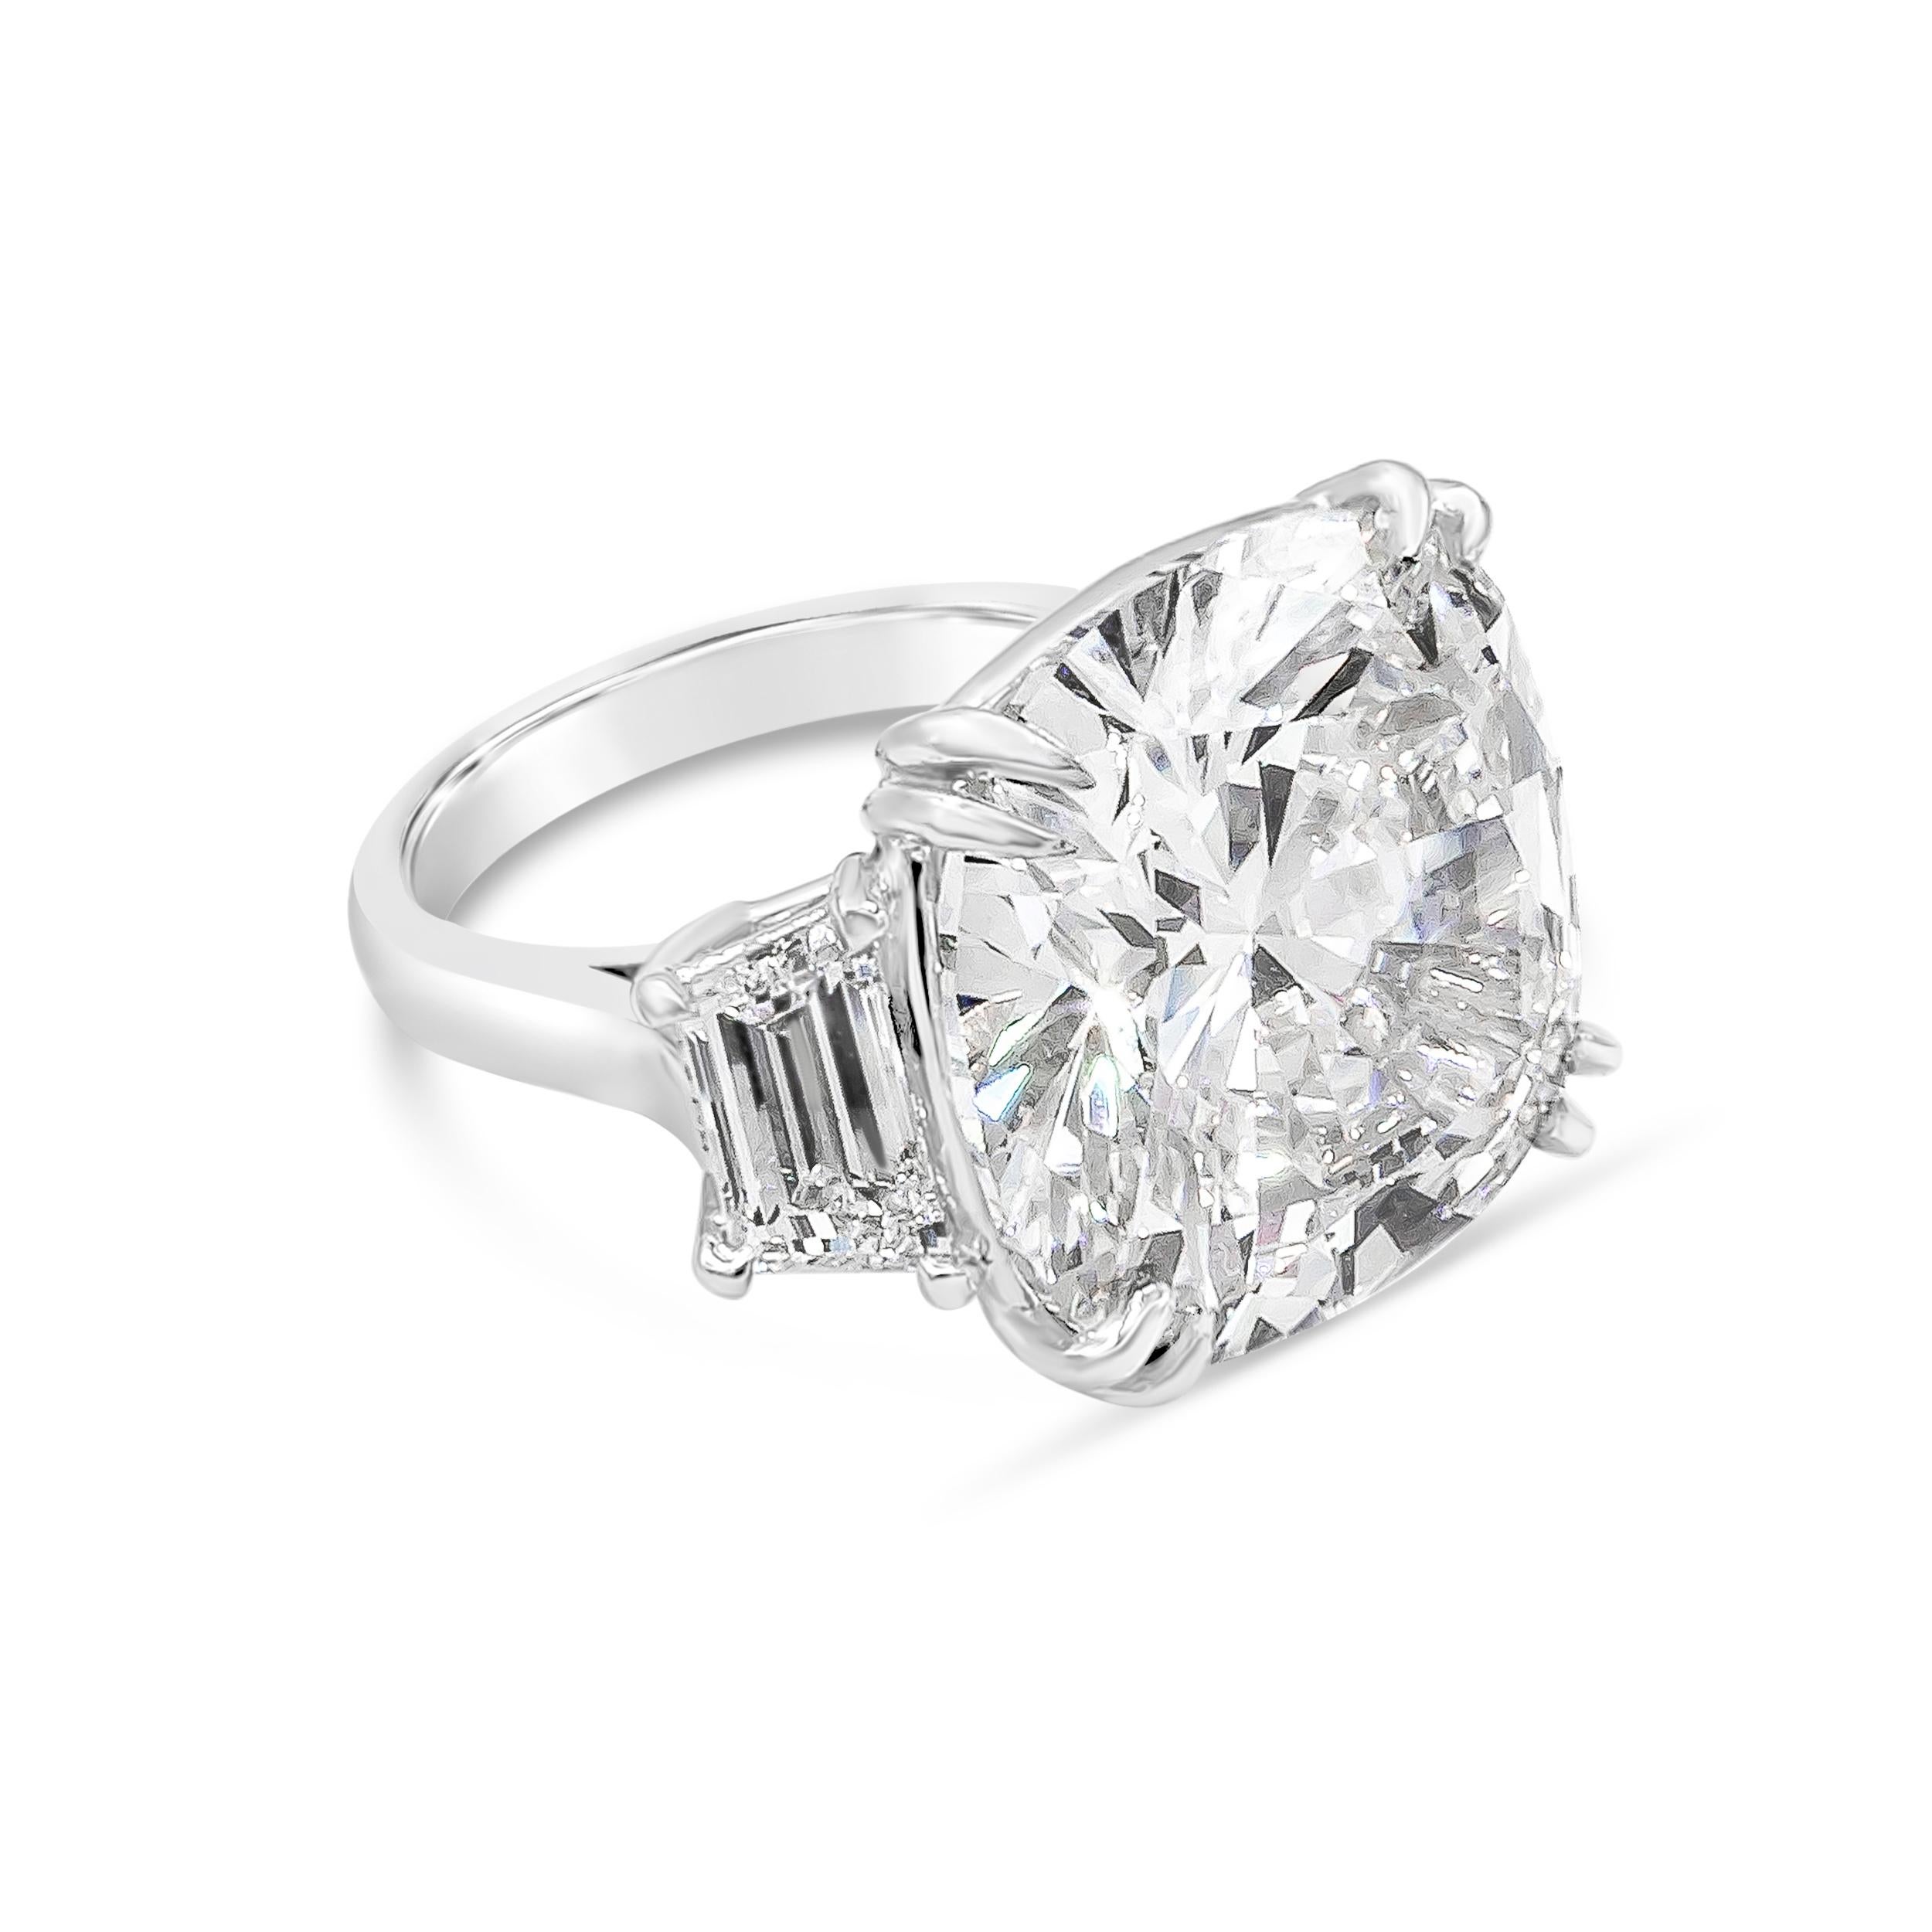 22 carat diamond ring